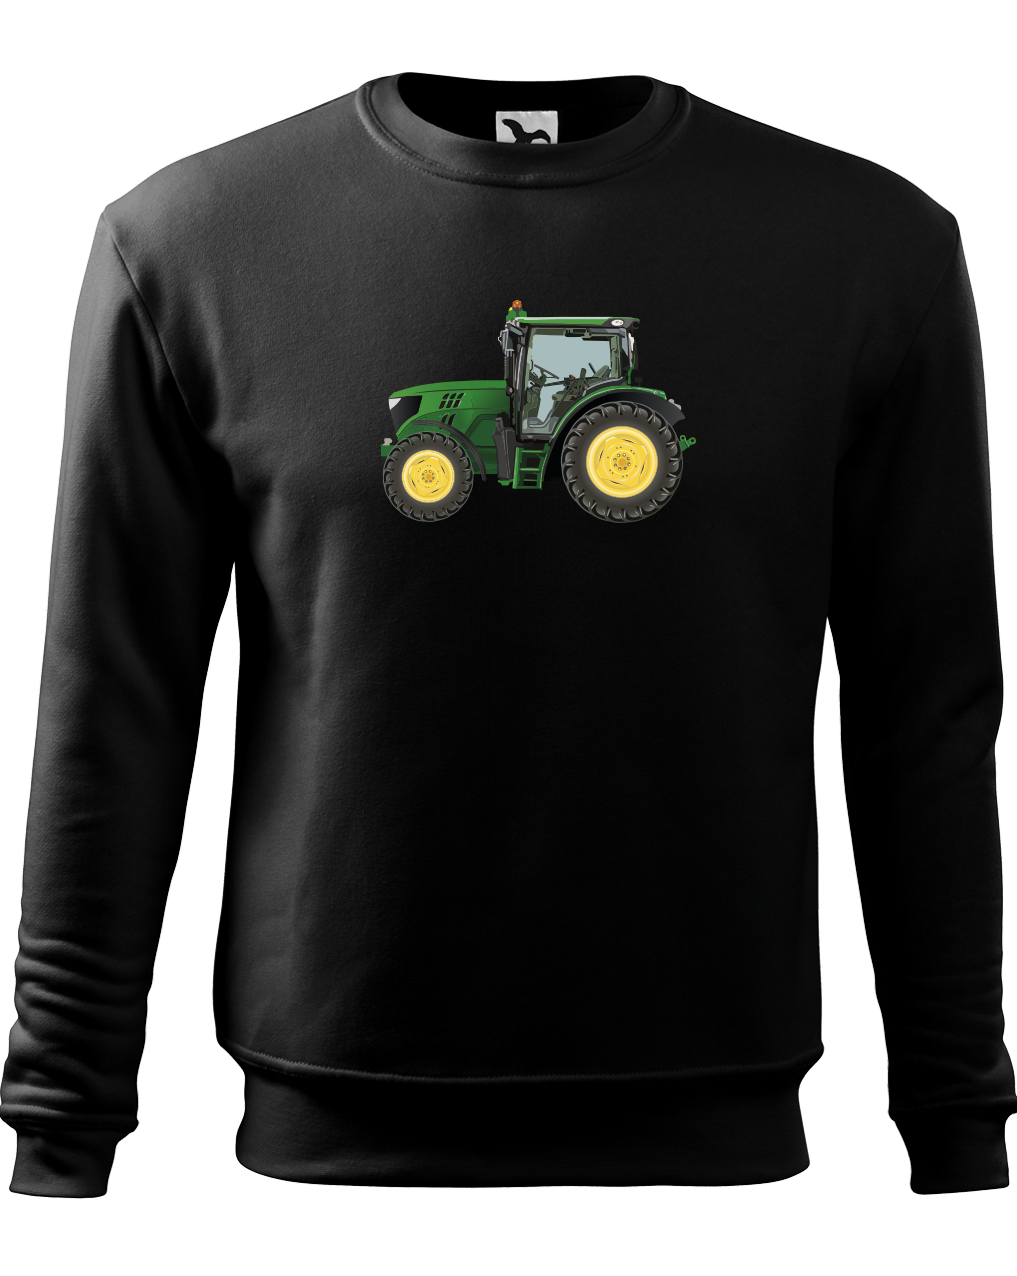 Mikina s traktorem - Zelený traktor Velikost: S, Barva: Černá